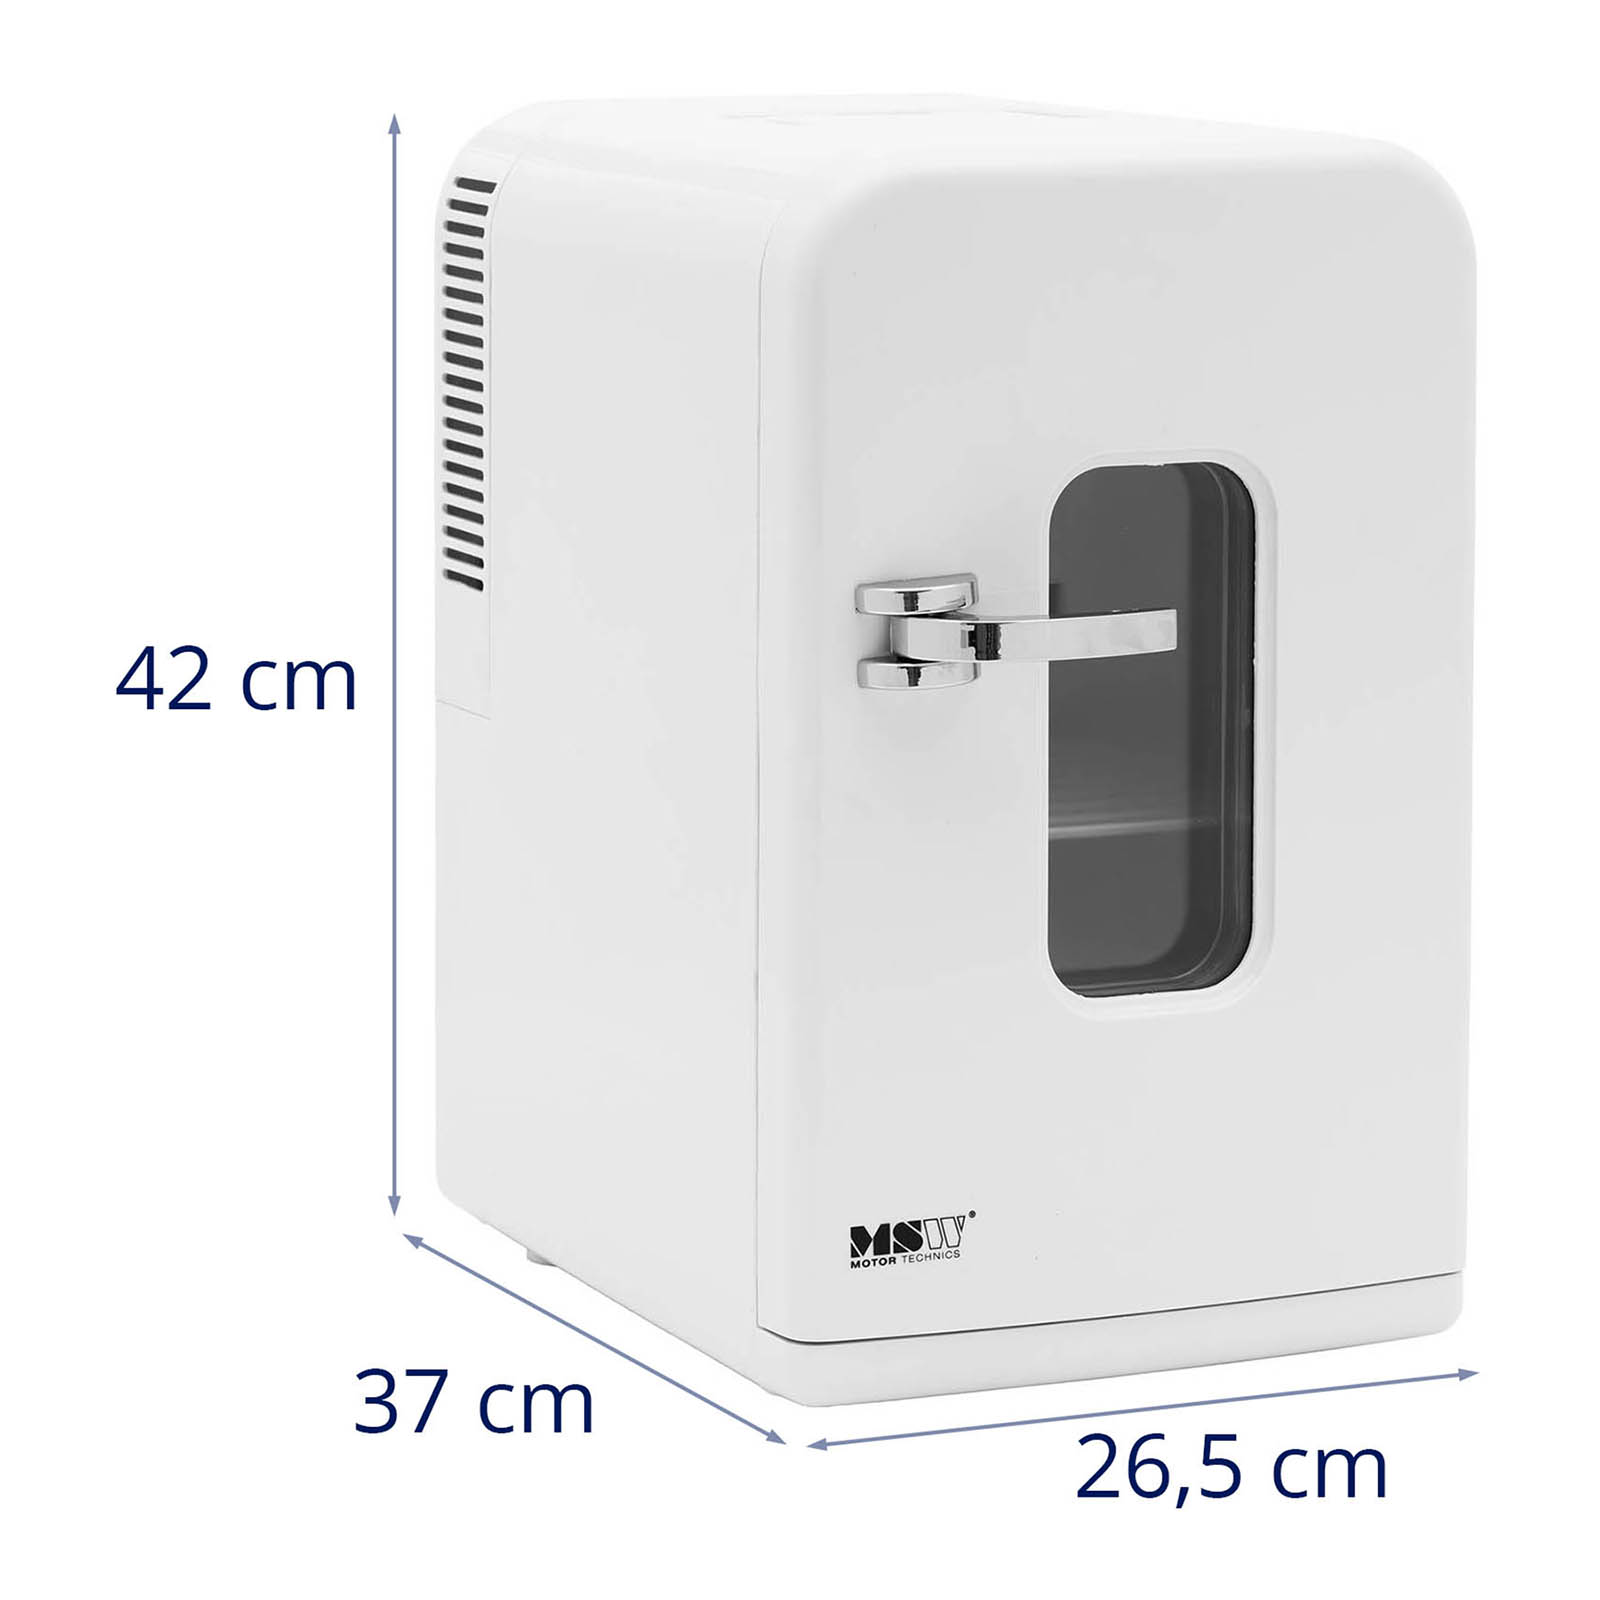 Mini-Kühlschrank 12 V / 230 V - 2-in-1-Gerät mit Warmhaltefunktion - 15 L - Weiß